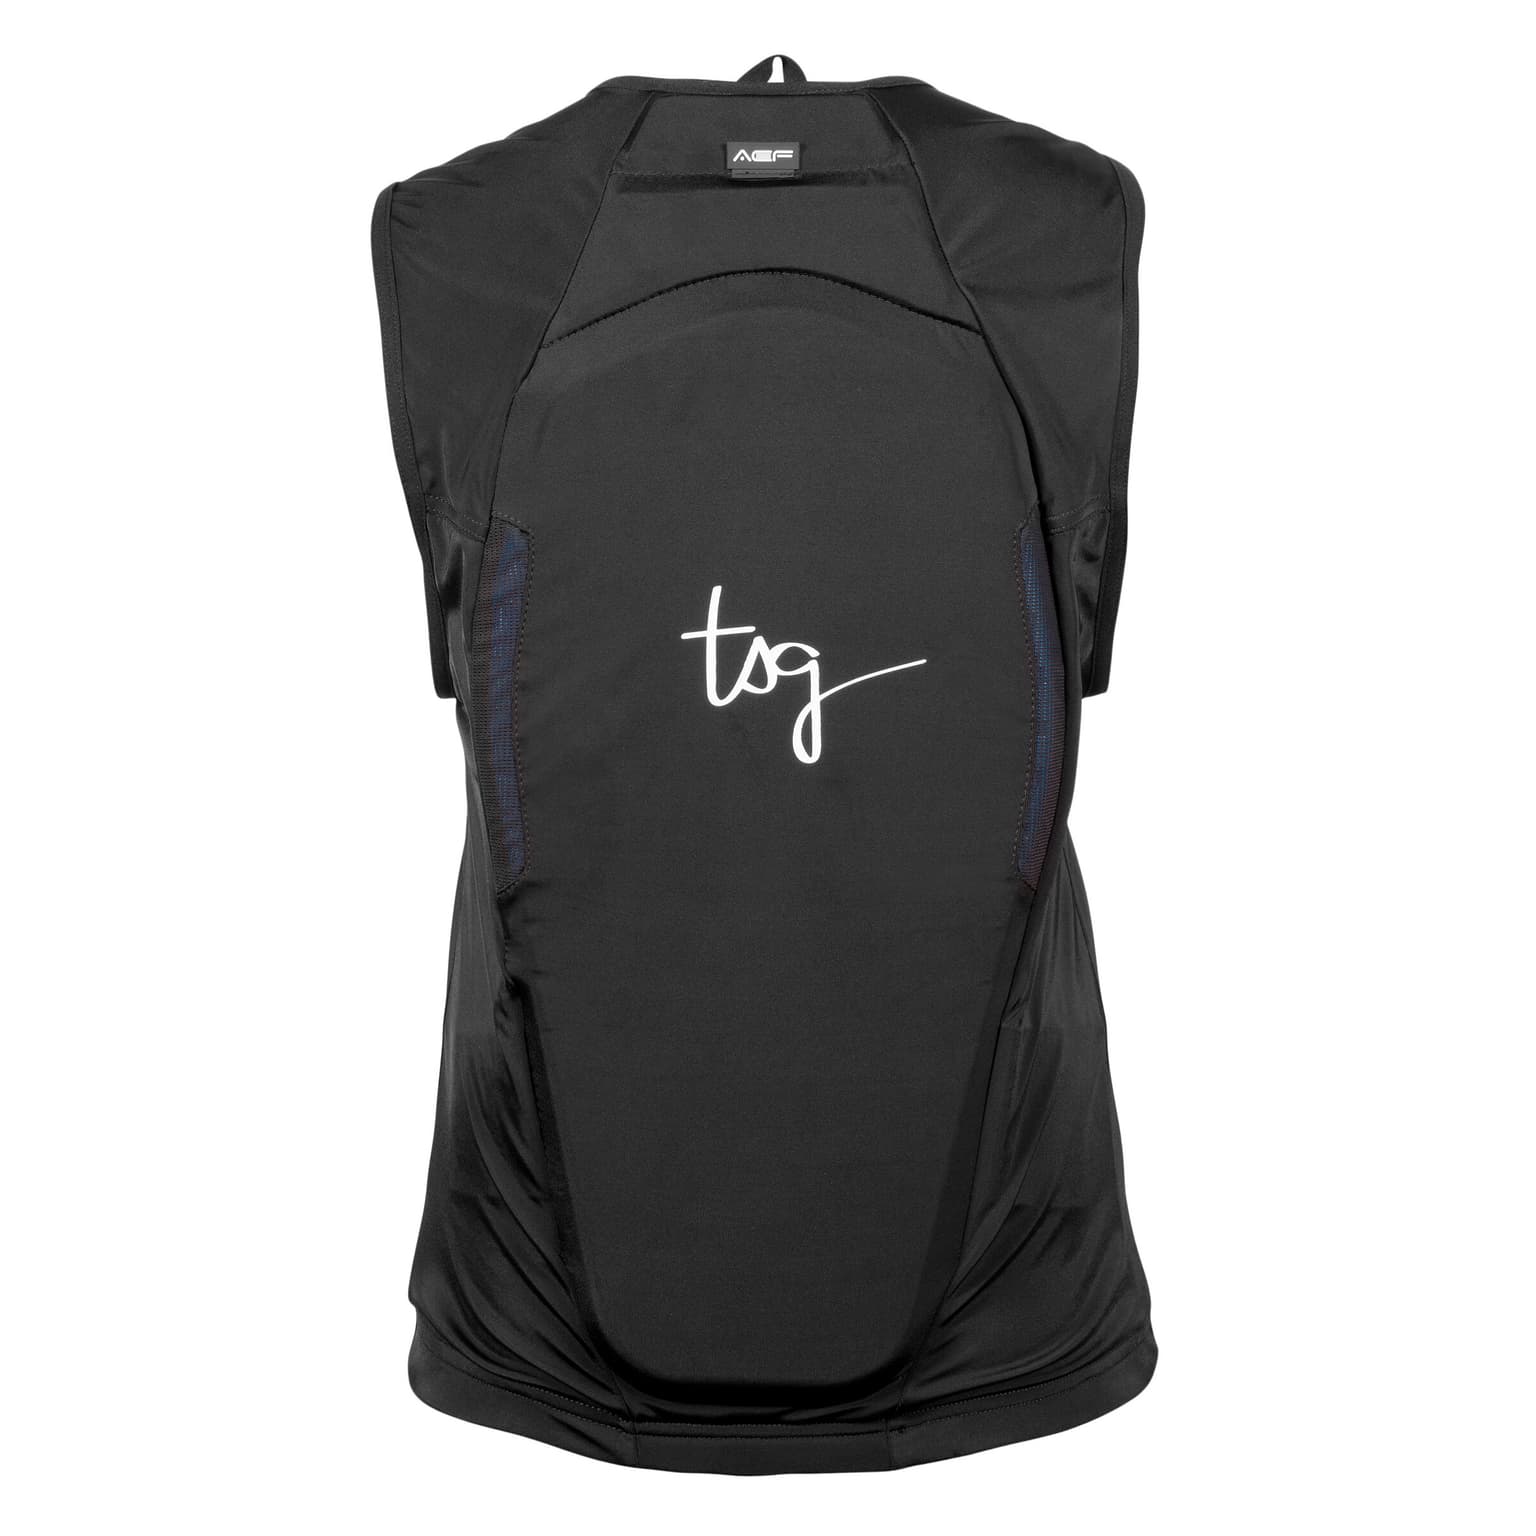 Tsg Tsg Backbone Vest A Protections noir 5